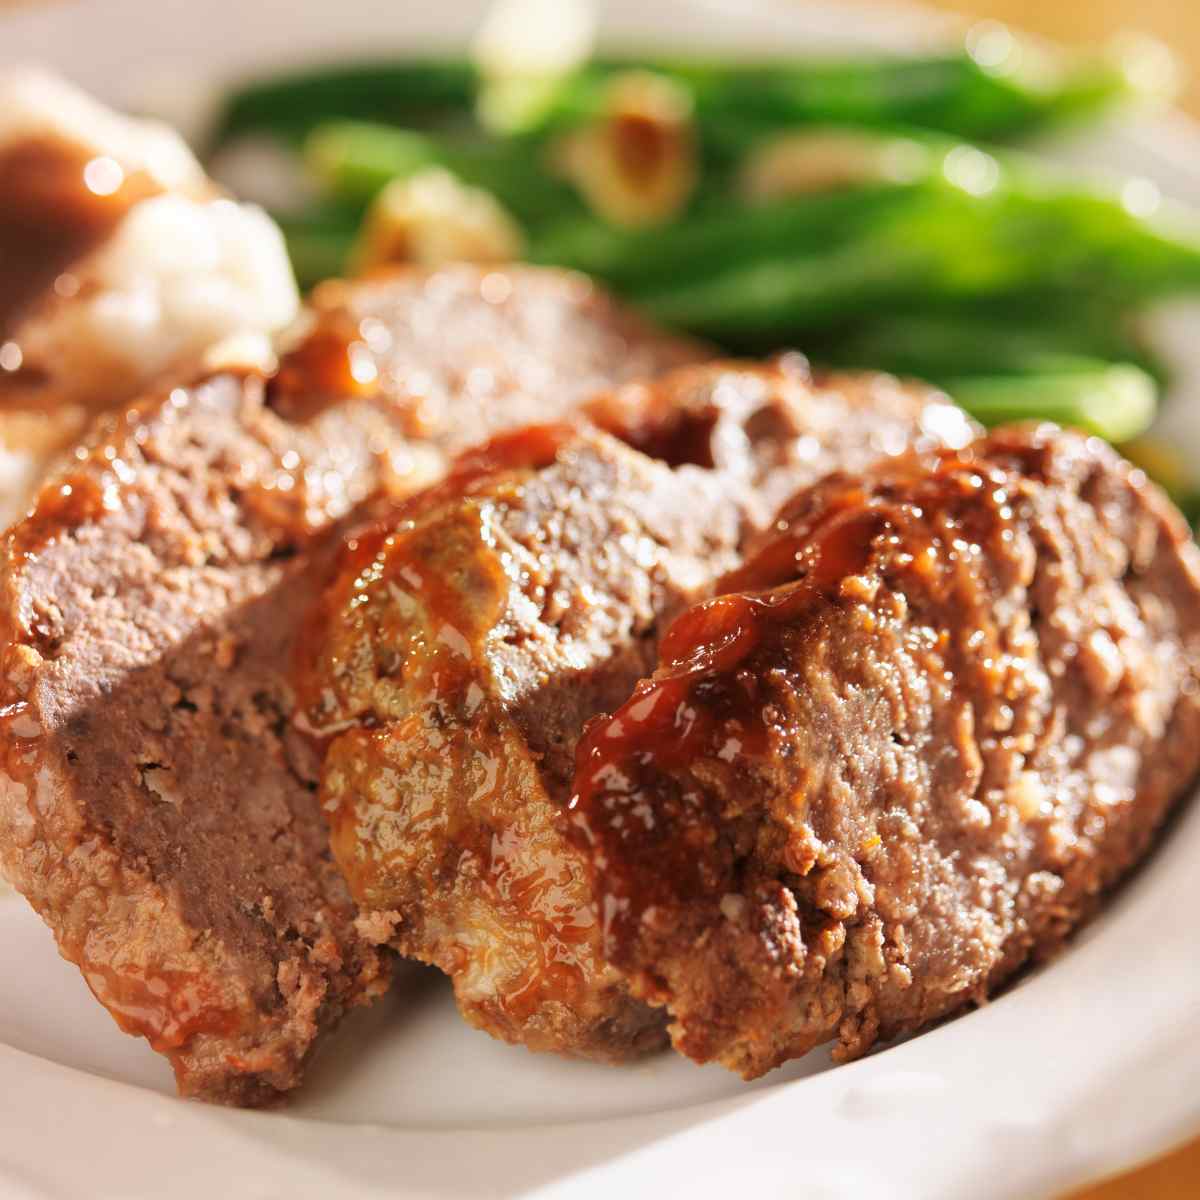 meatloaf with liver served on a dinner plate